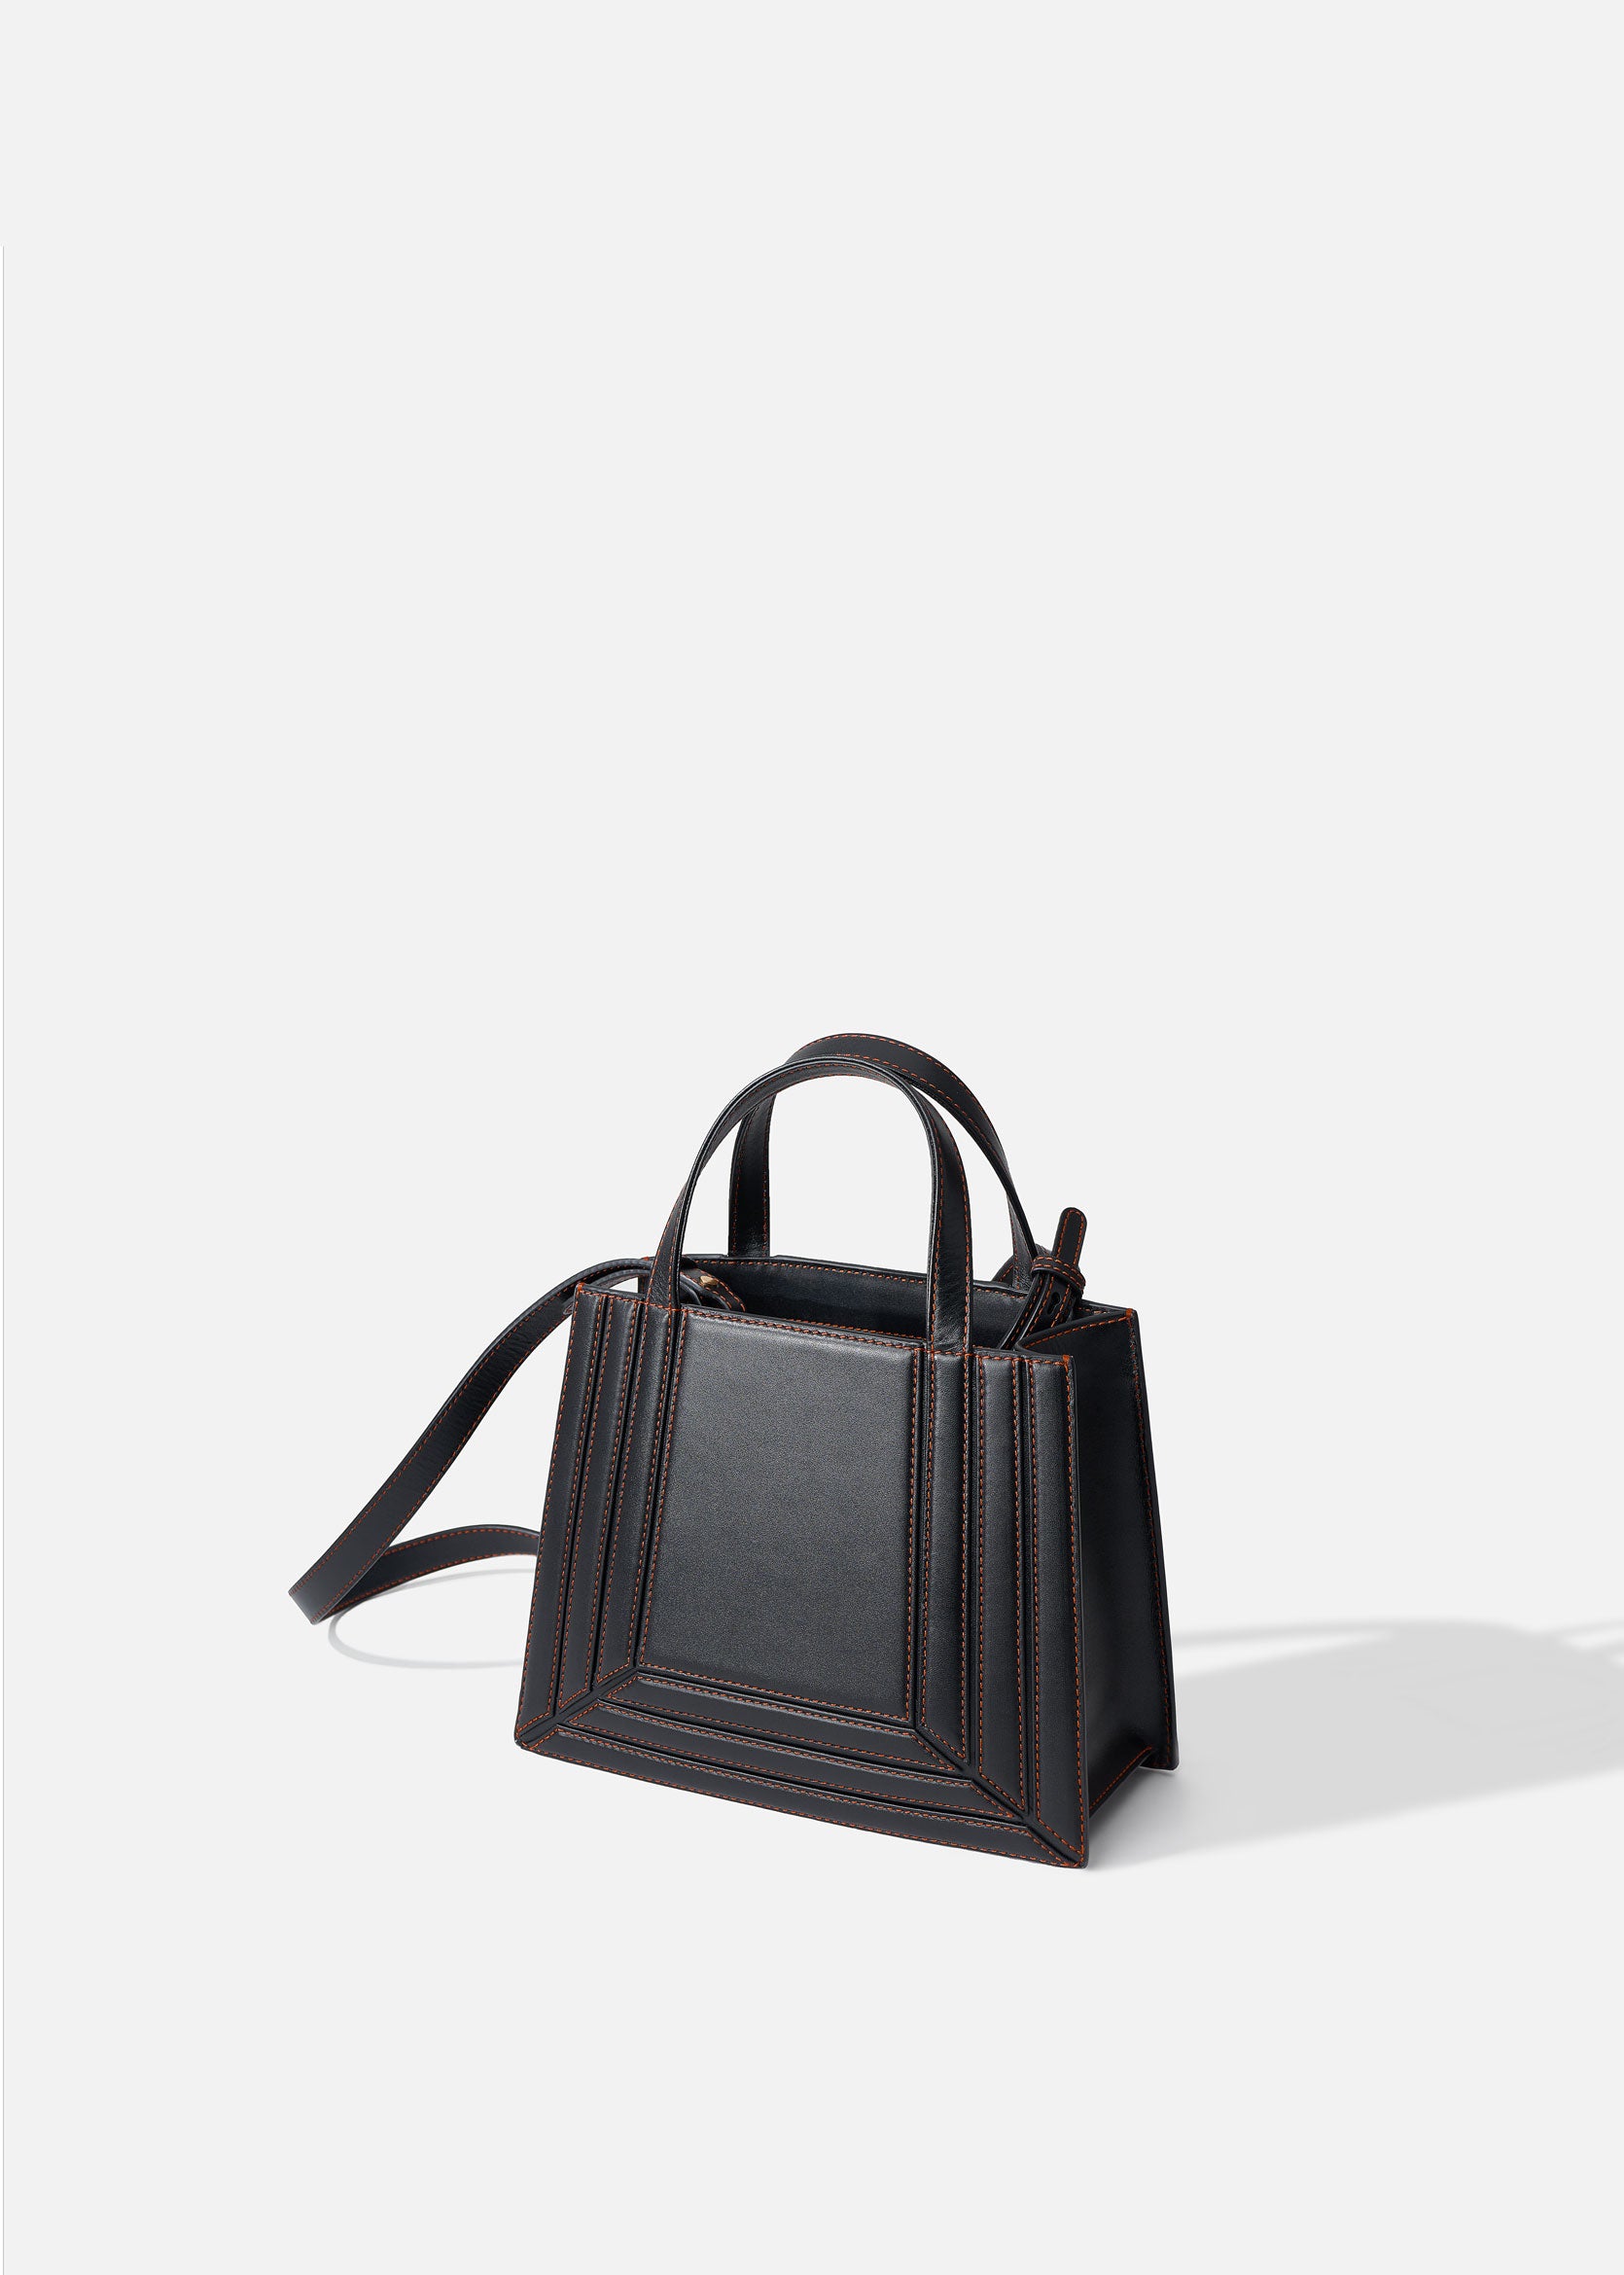 Palladian laramie leather double handle bag in black